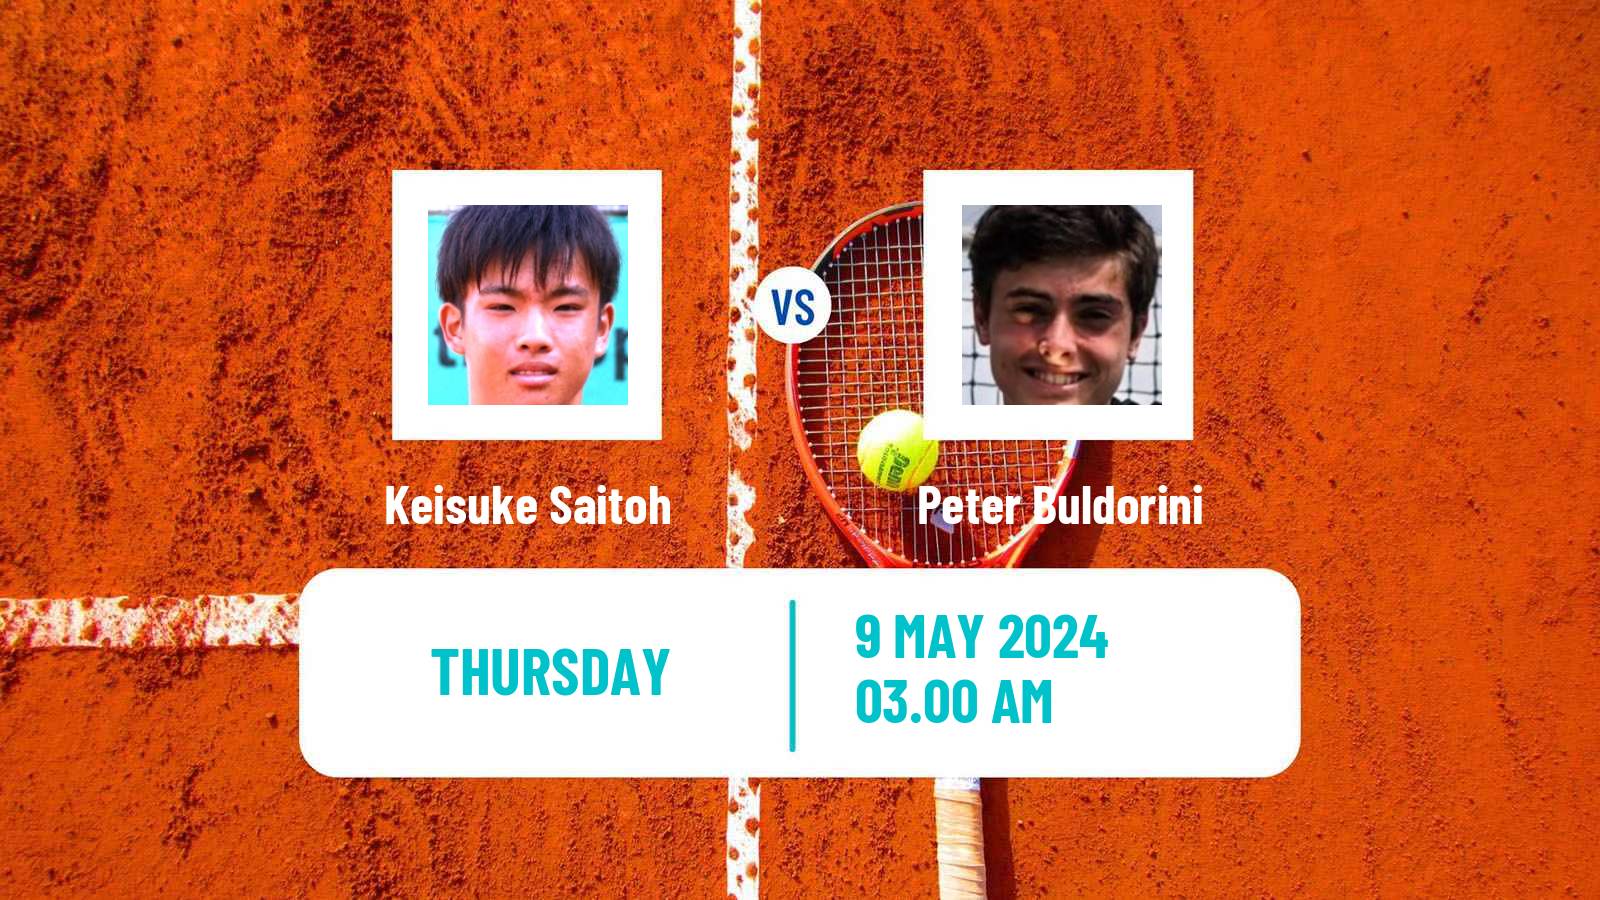 Tennis ITF M25 Kursumlijska Banja Men Keisuke Saitoh - Peter Buldorini